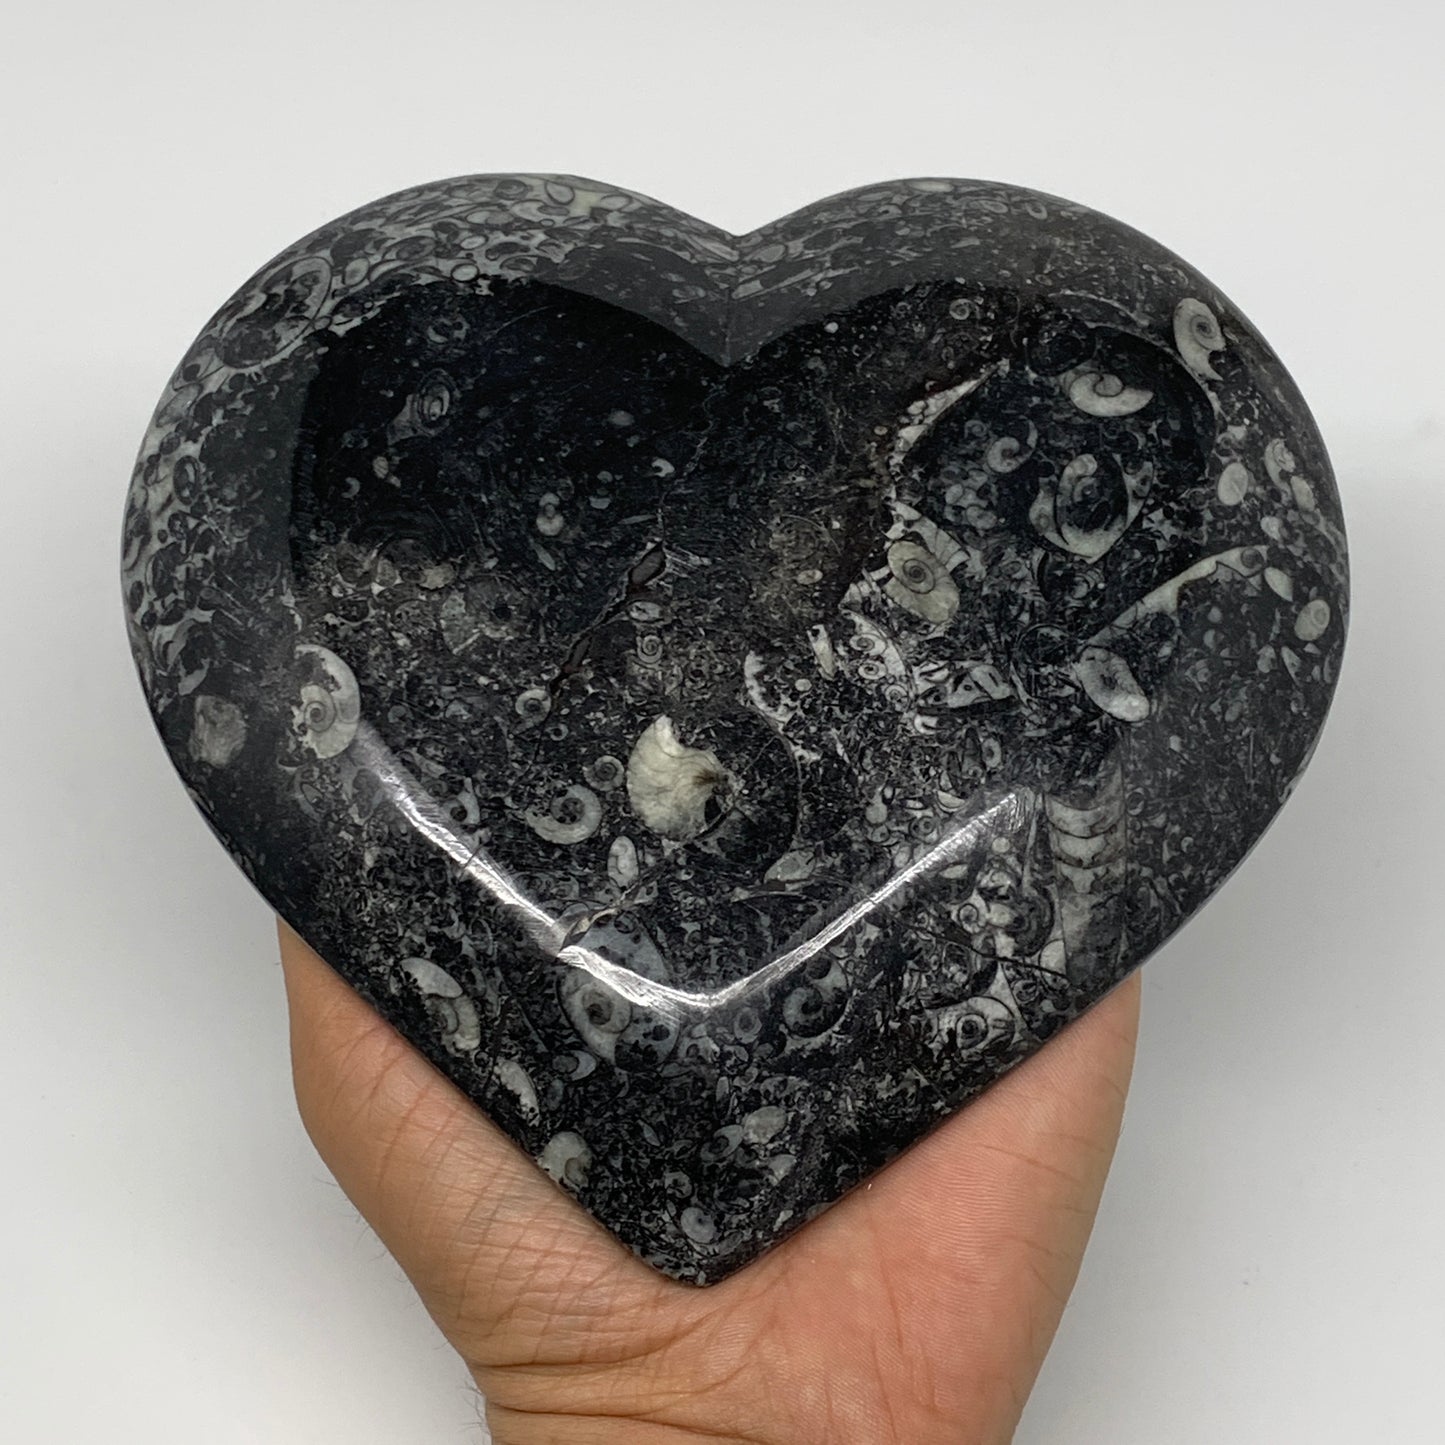 2Pcs, 6.25"x6.25" Heart Fossils Orthoceras Ammonite Bowls @Morocco, B8800